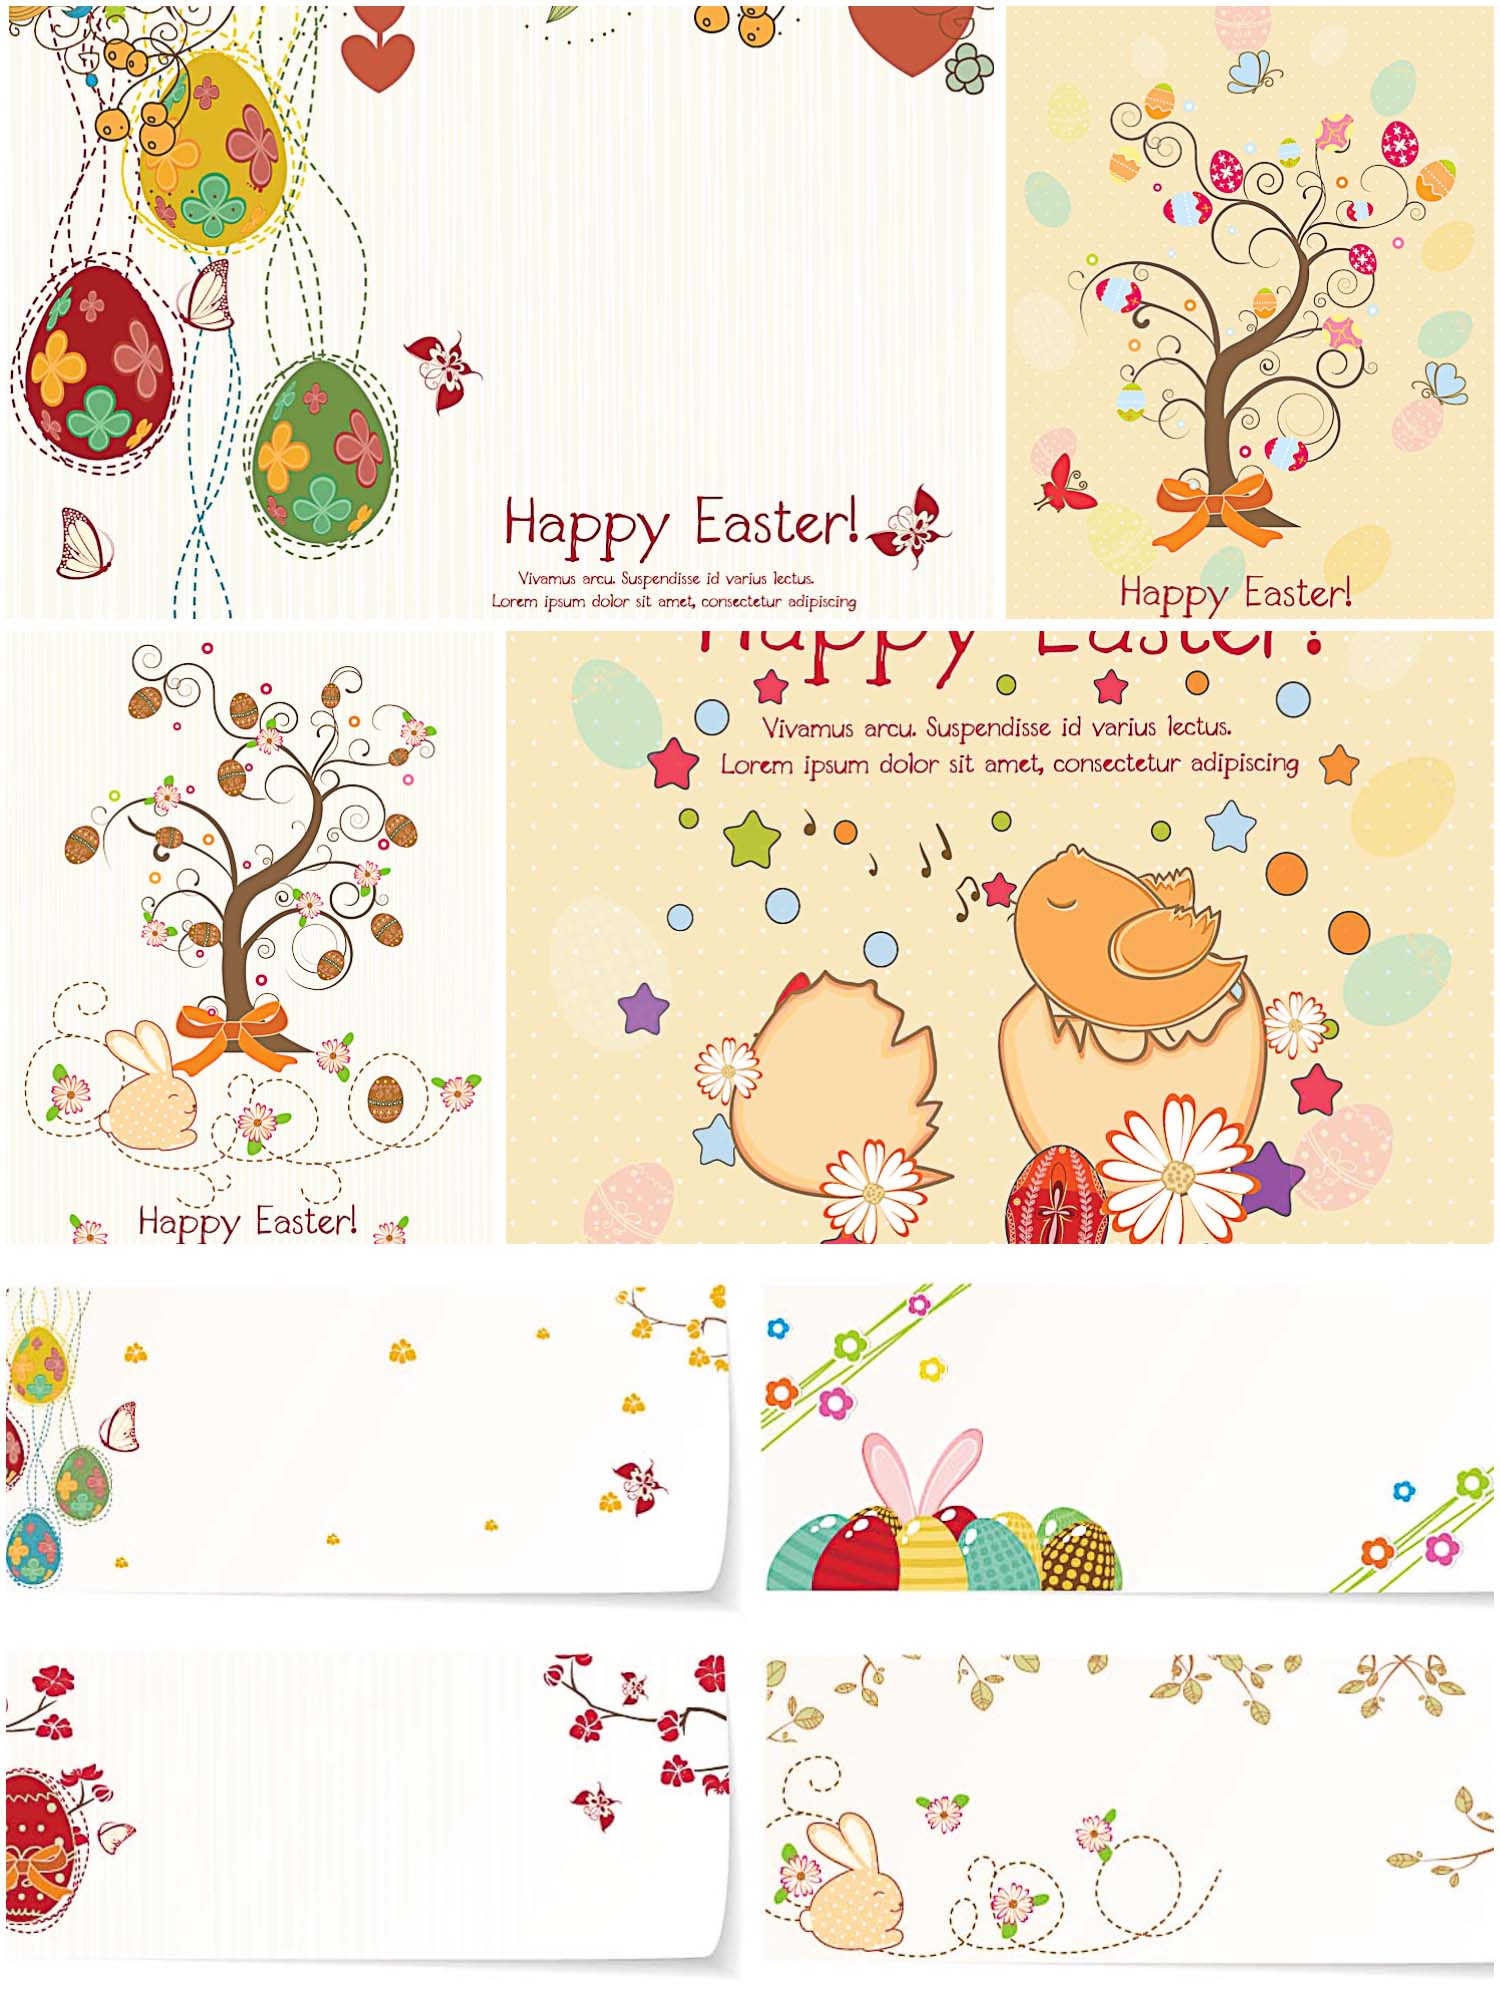 Cute Easter greeting card set vector